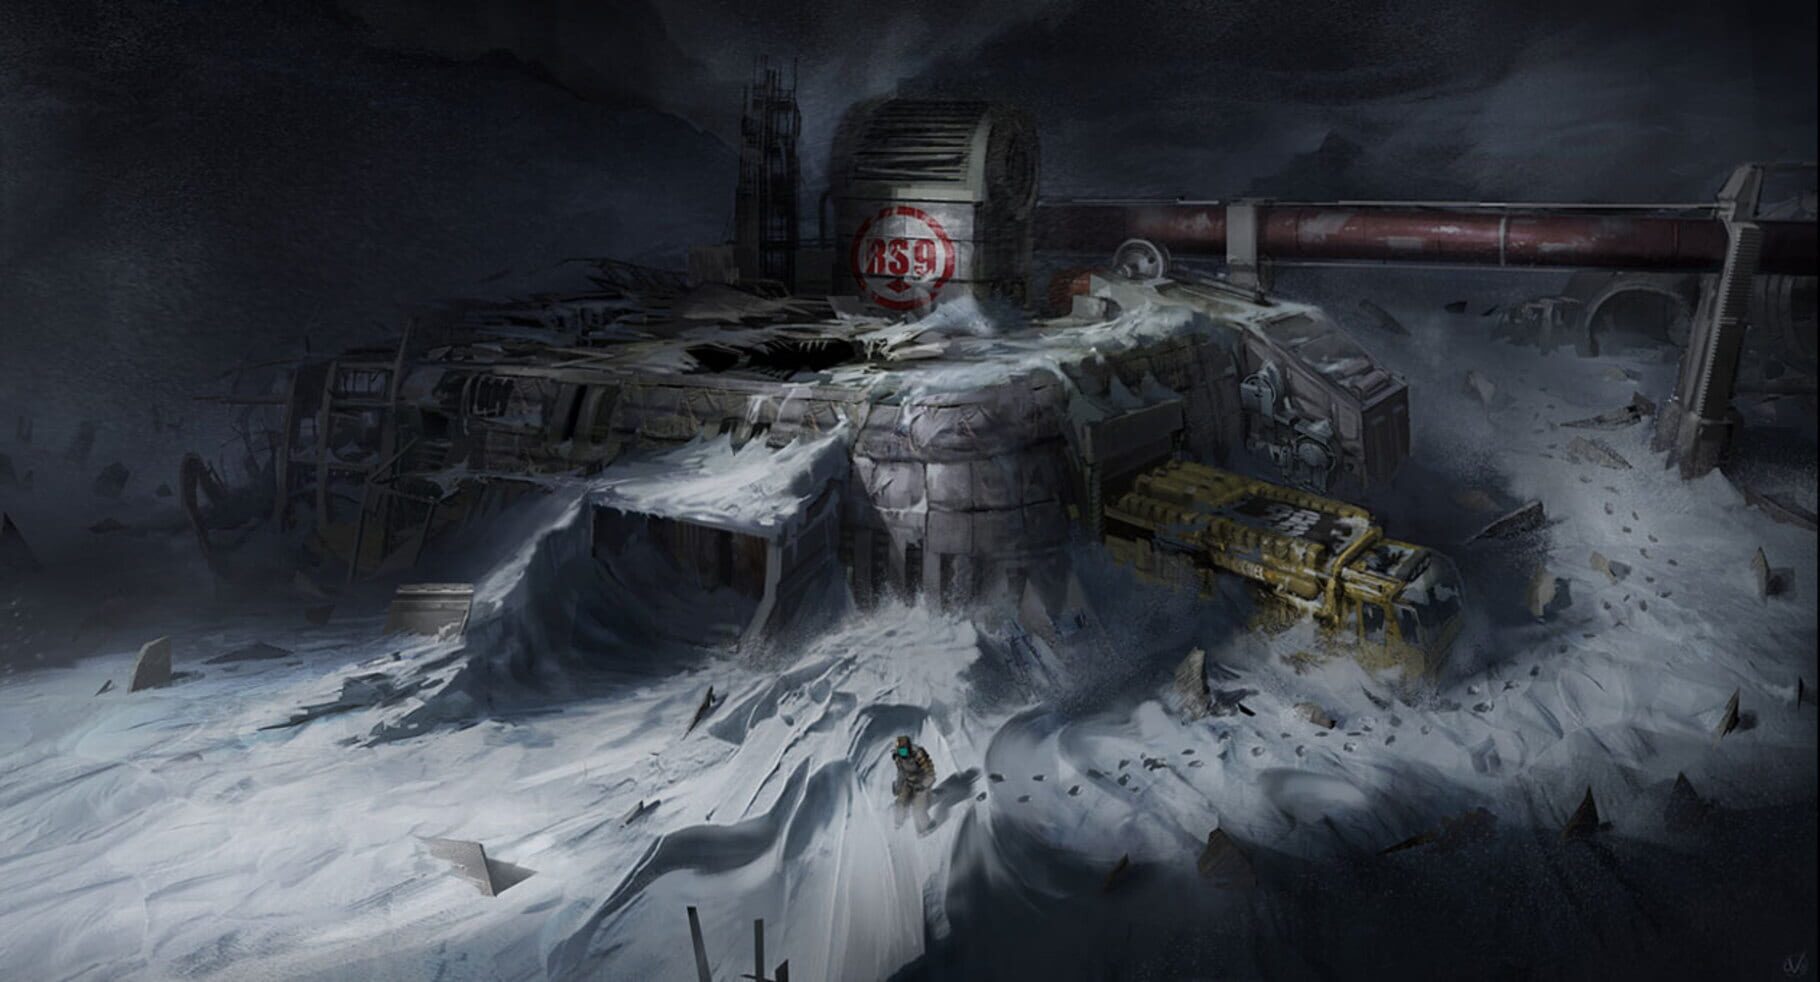 Dead Space™ 3 Enervator on Steam